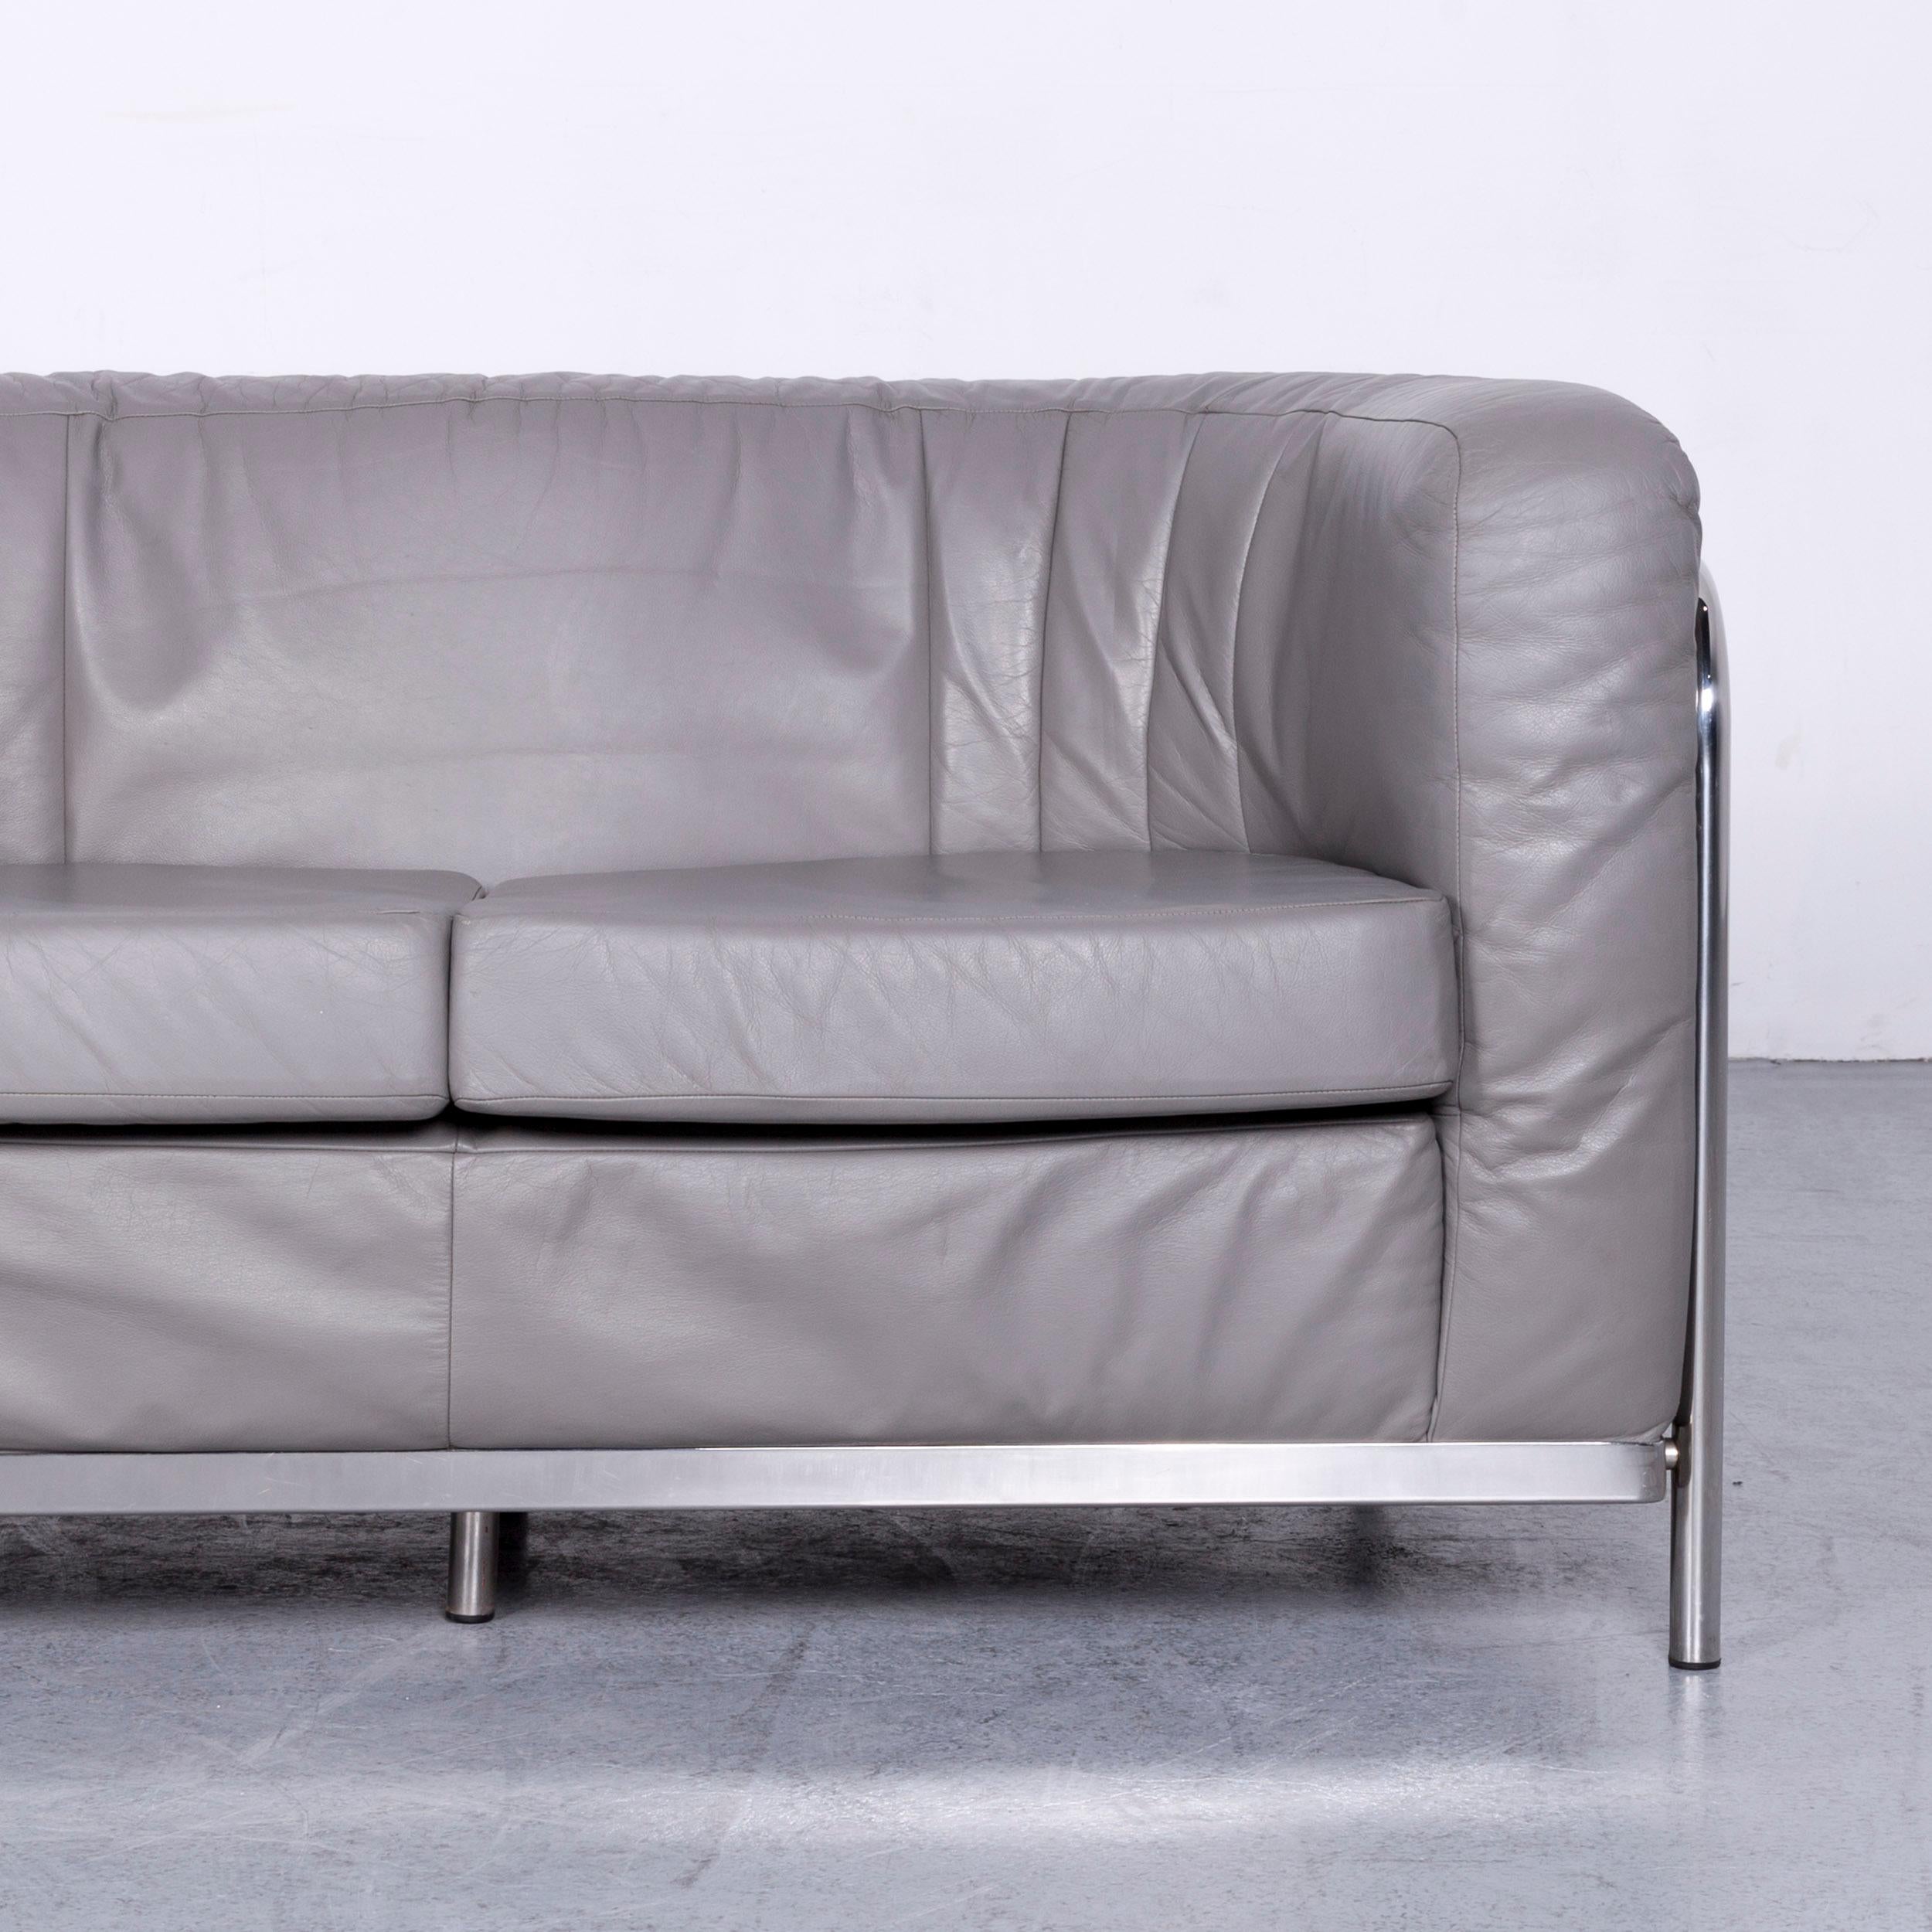 Italian Zanotta Onda Designer Sofa Leather Grey Two-Seat Couch